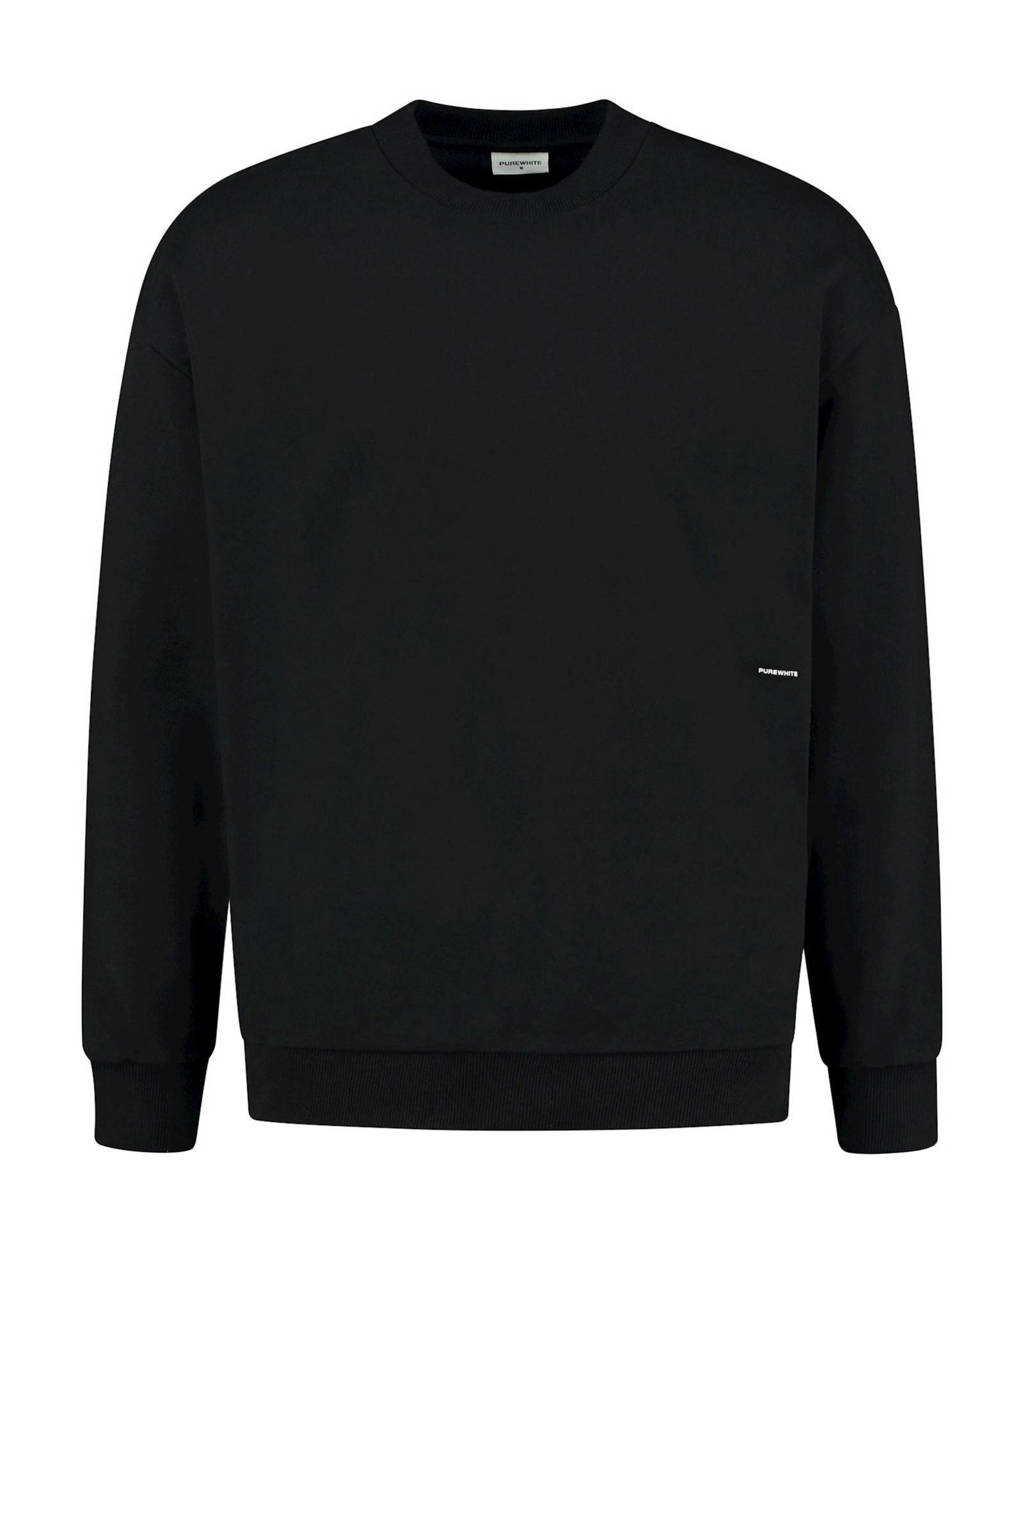 Purewhite sweater black